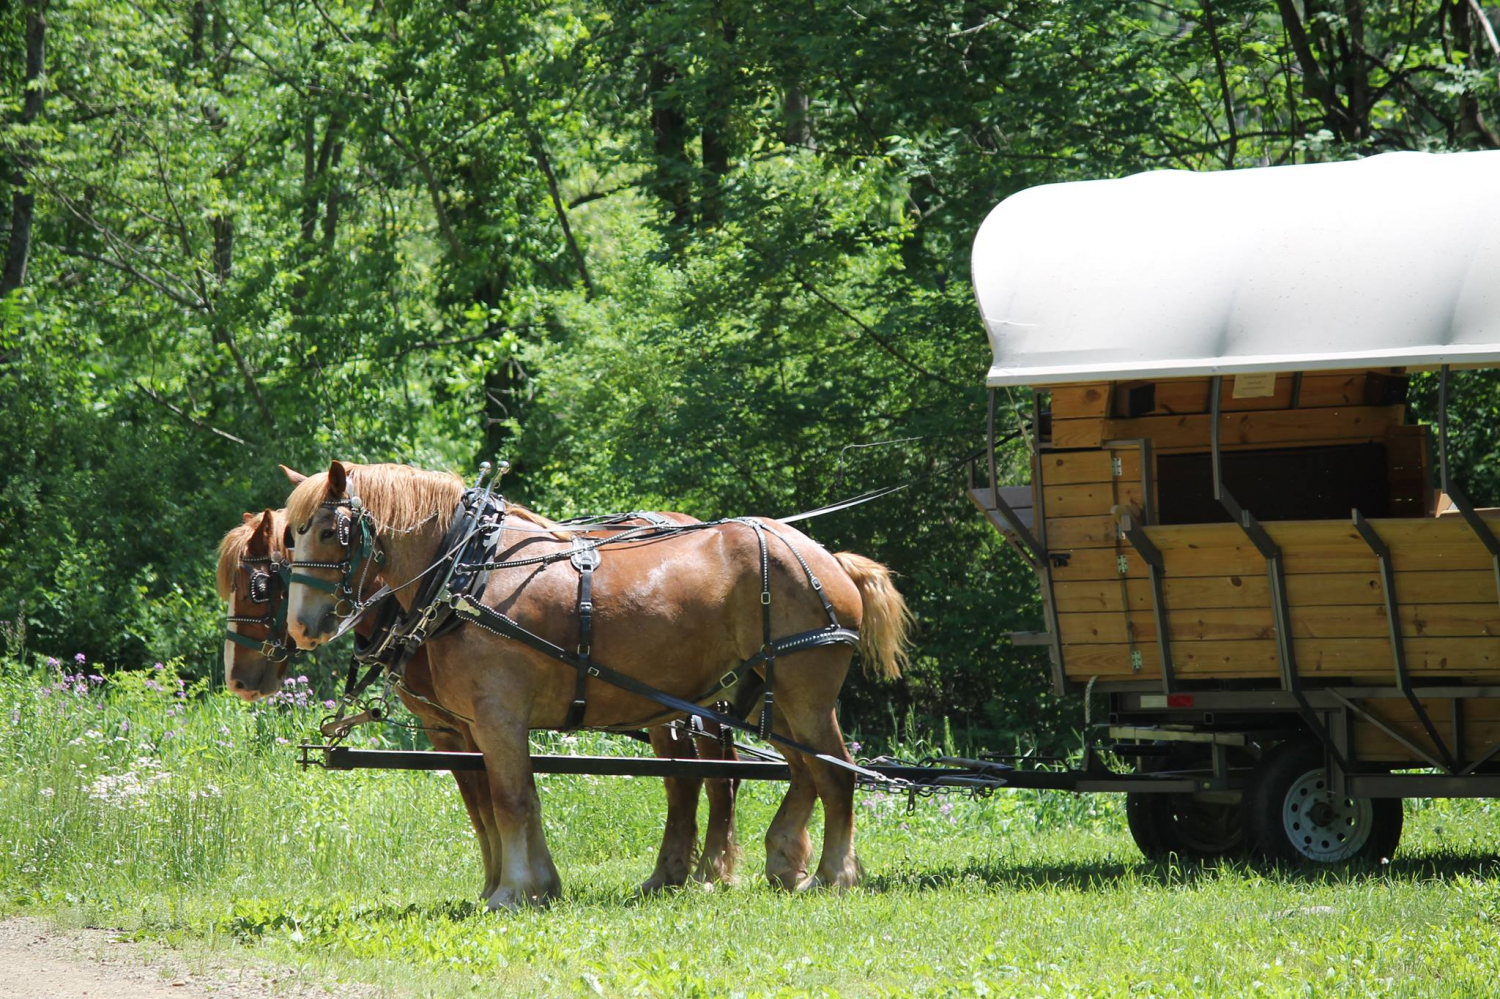 Wagon Ride in Pine Creek Gorge - Tue., June 6, 2023